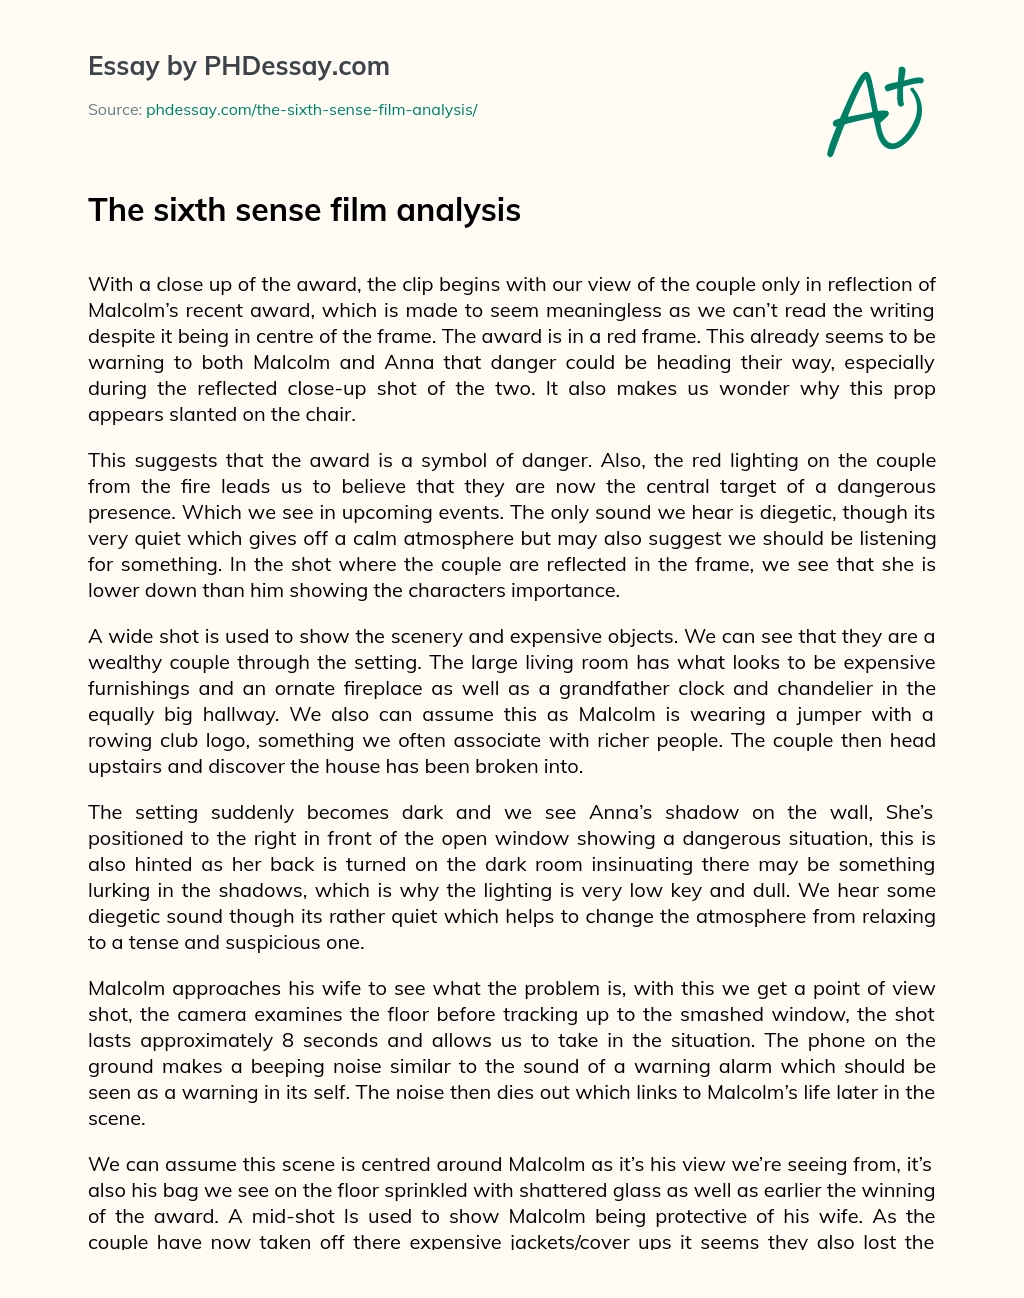 The sixth sense film analysis essay